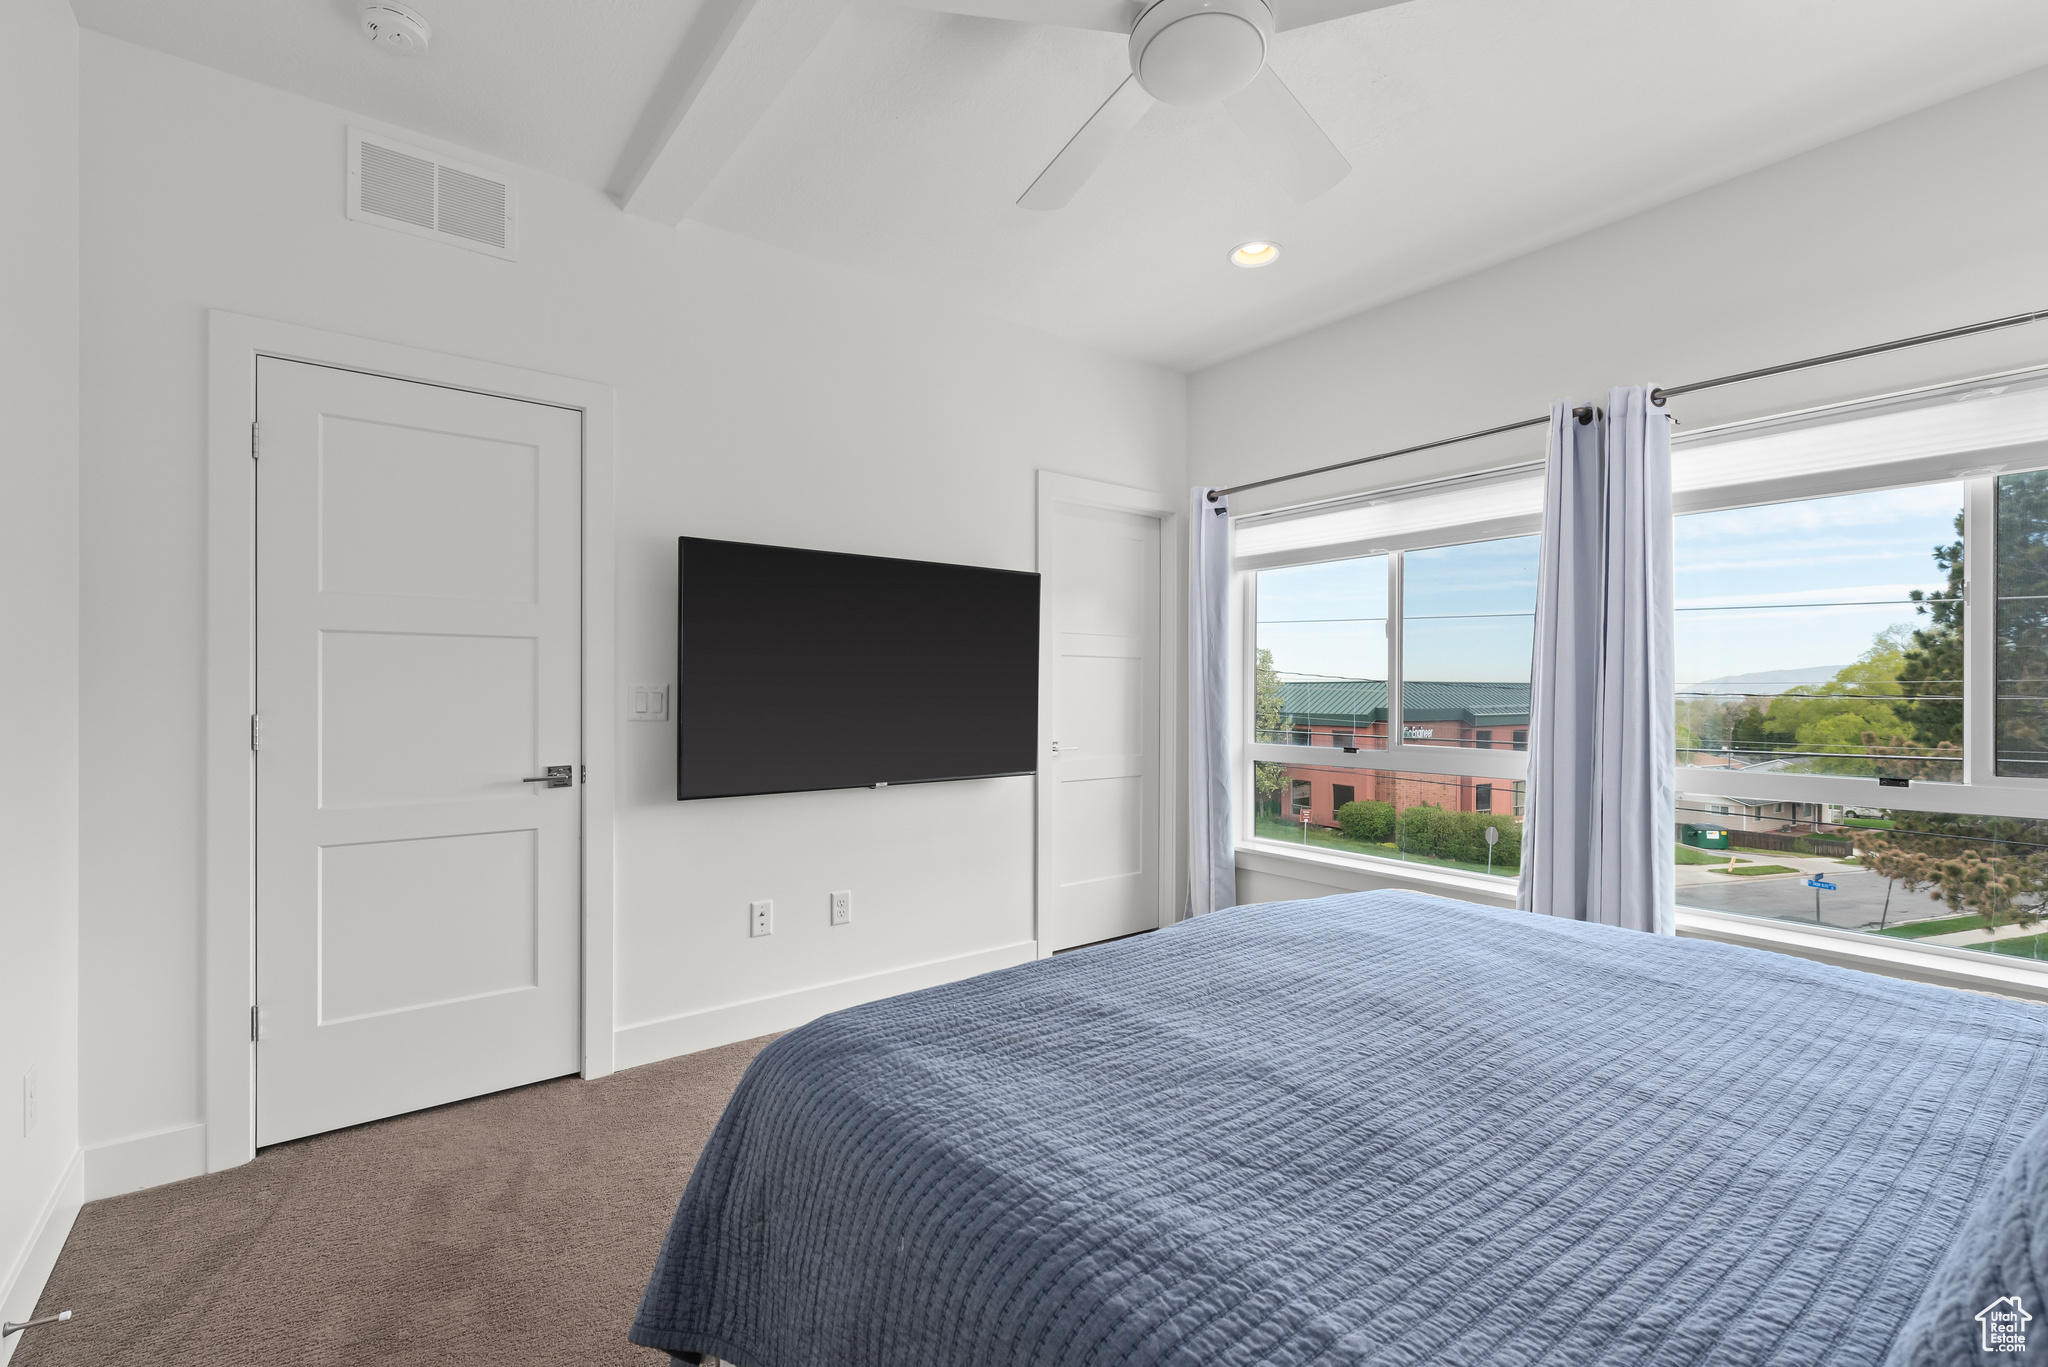 Owner bedroom featuring window view & ceiling fan